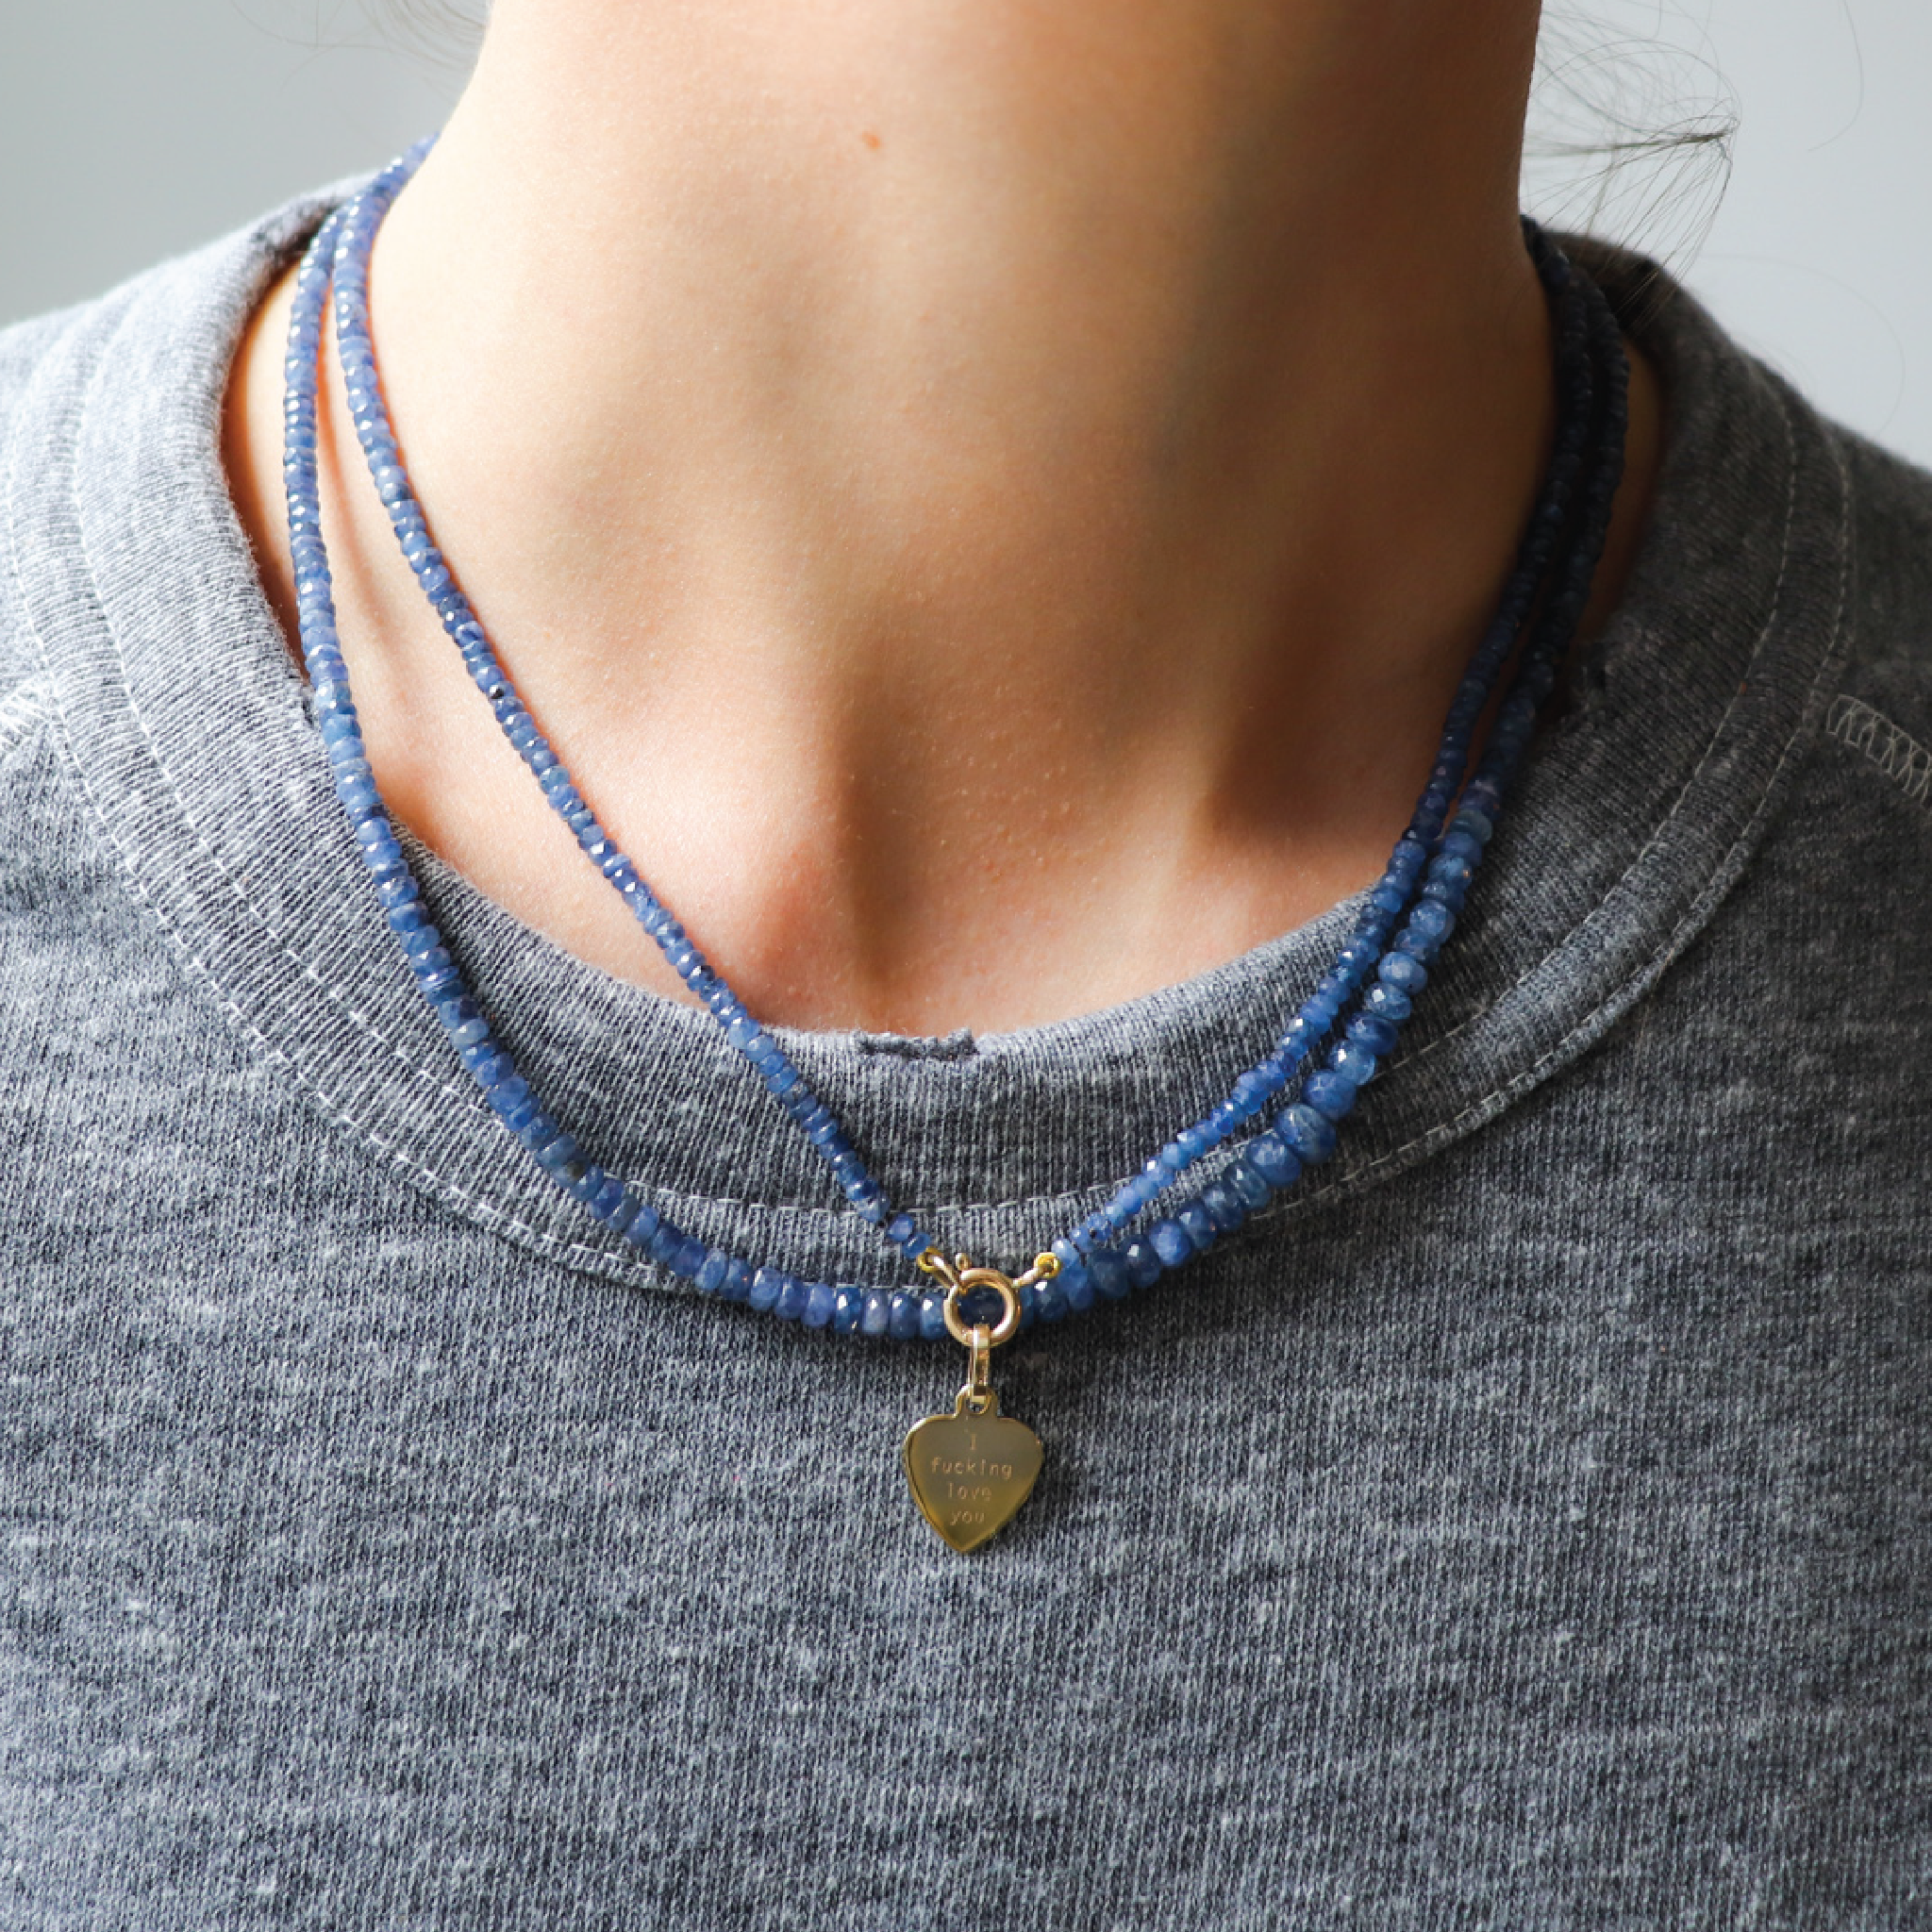 Blue Sapphire Strand Necklace